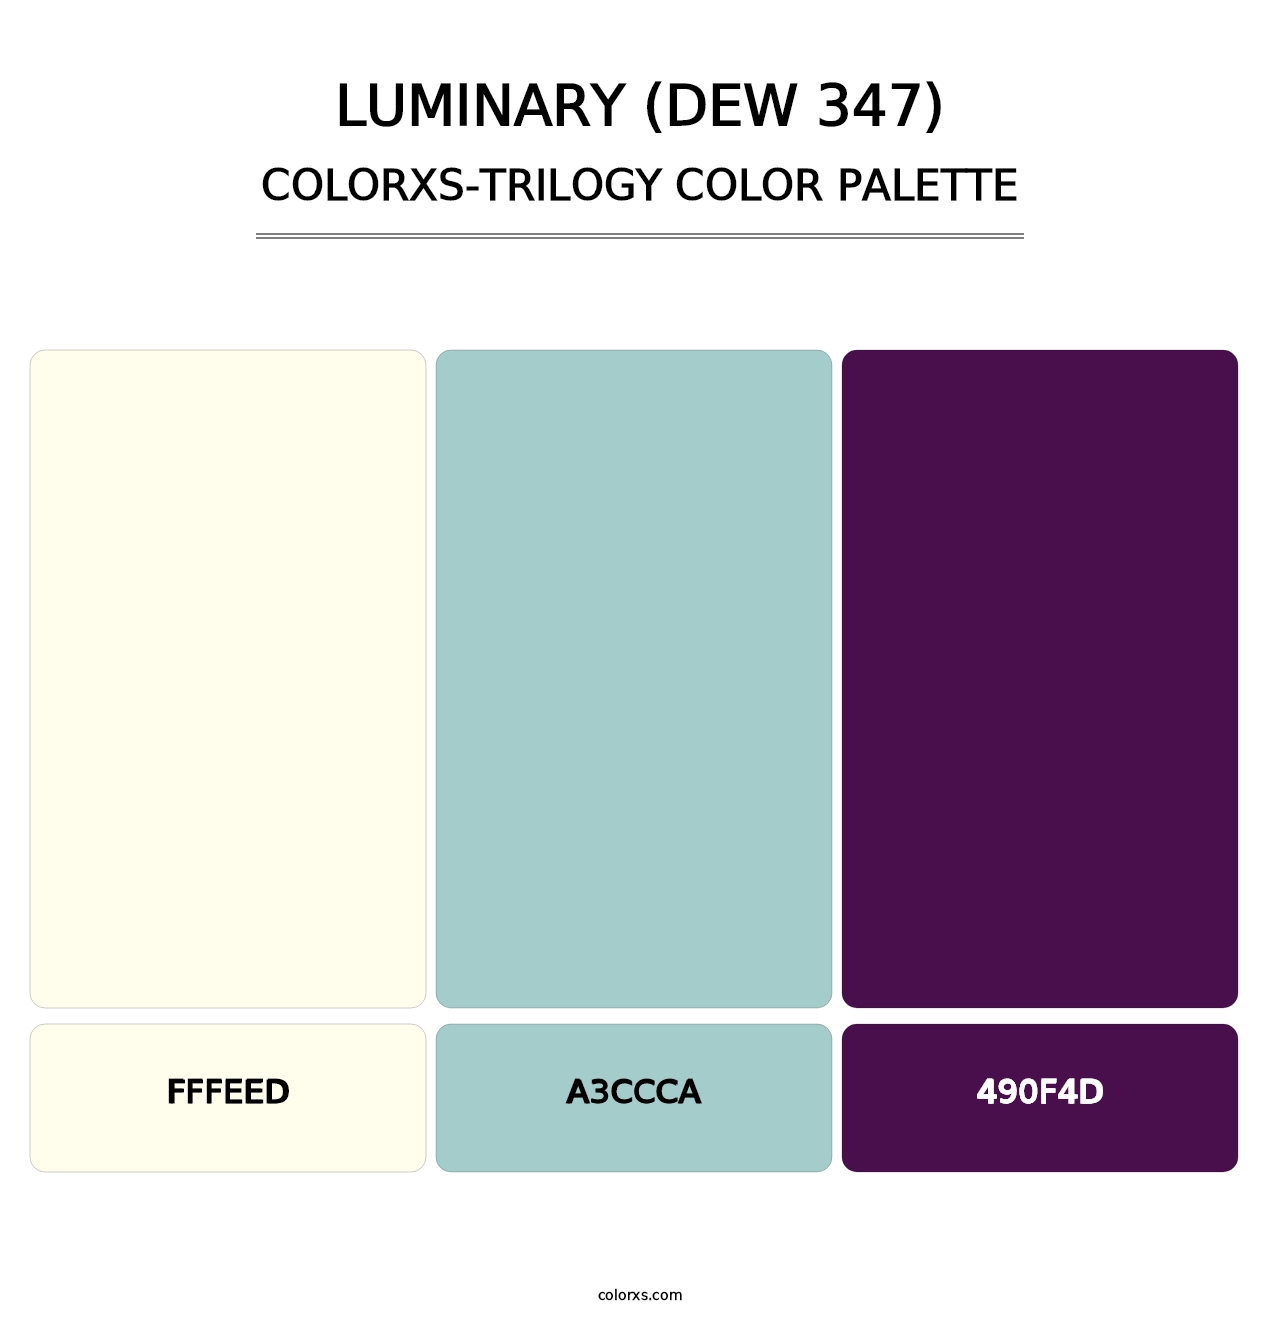 Luminary (DEW 347) - Colorxs Trilogy Palette